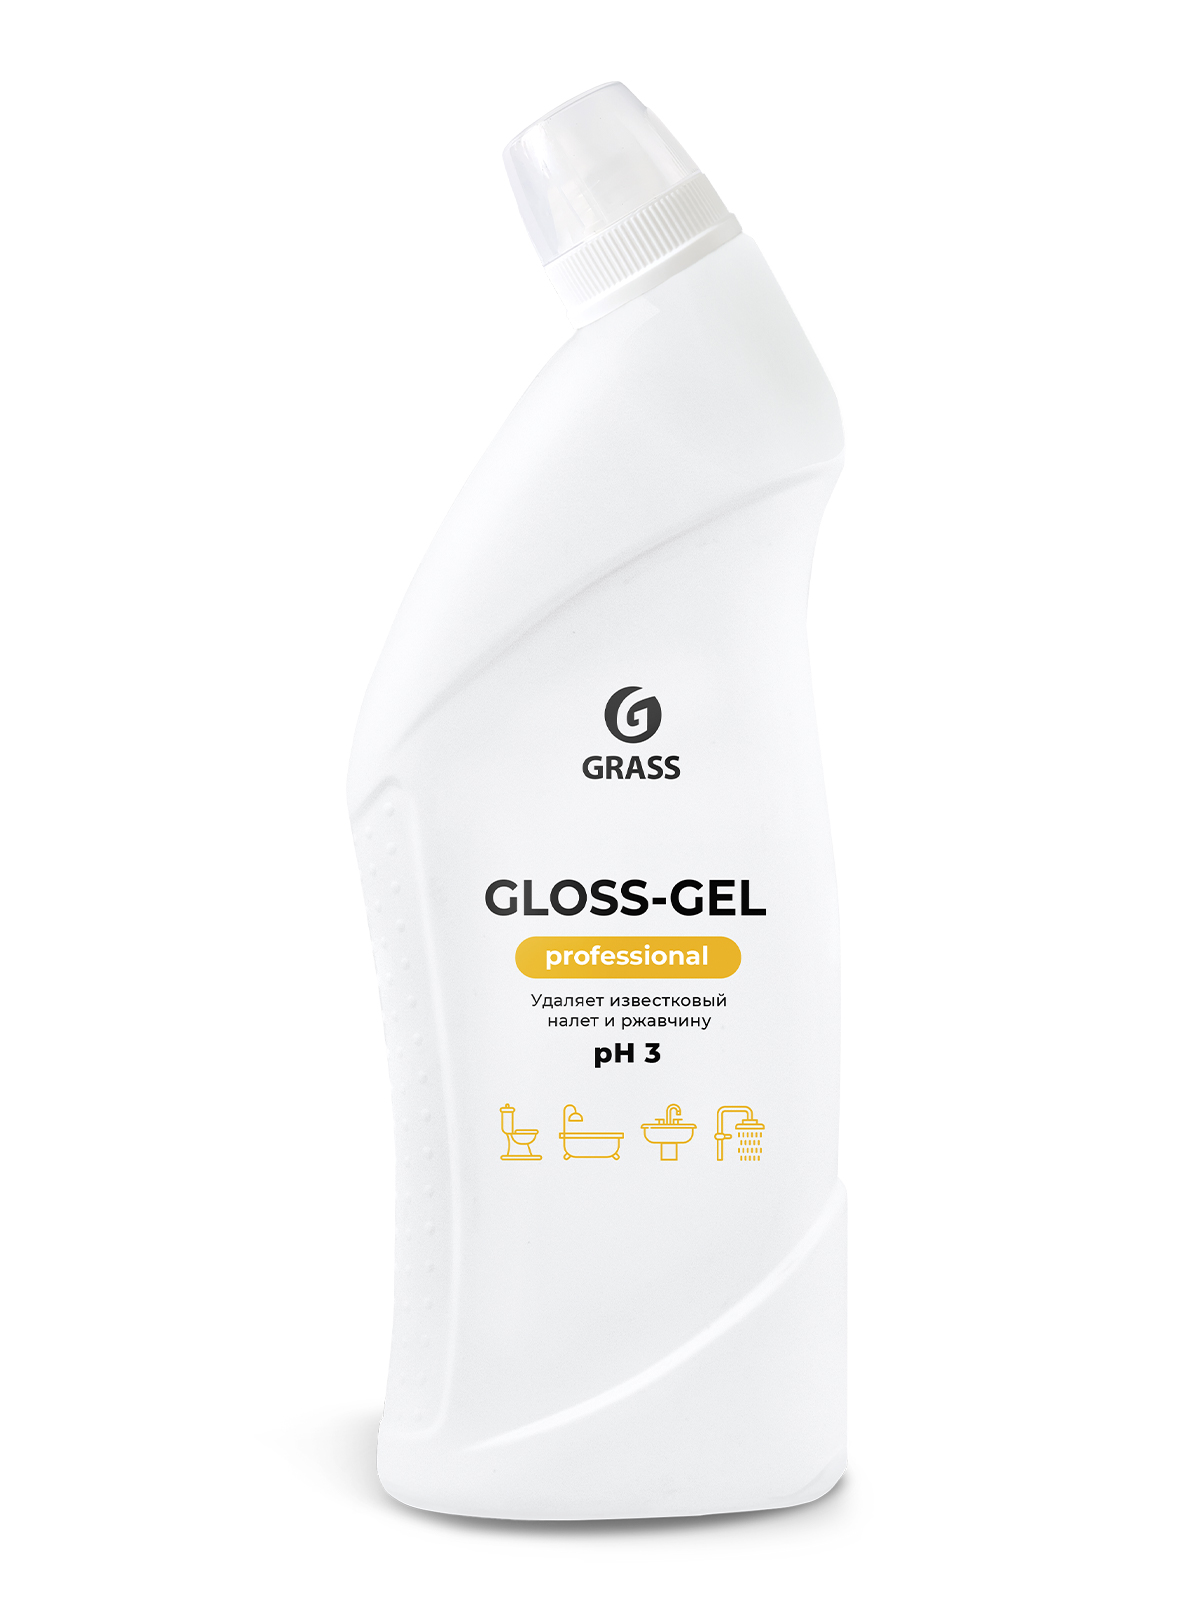 Гель для чистки туалета Gloss gel Professional от налёта и ржавчины 750 мл, 125568